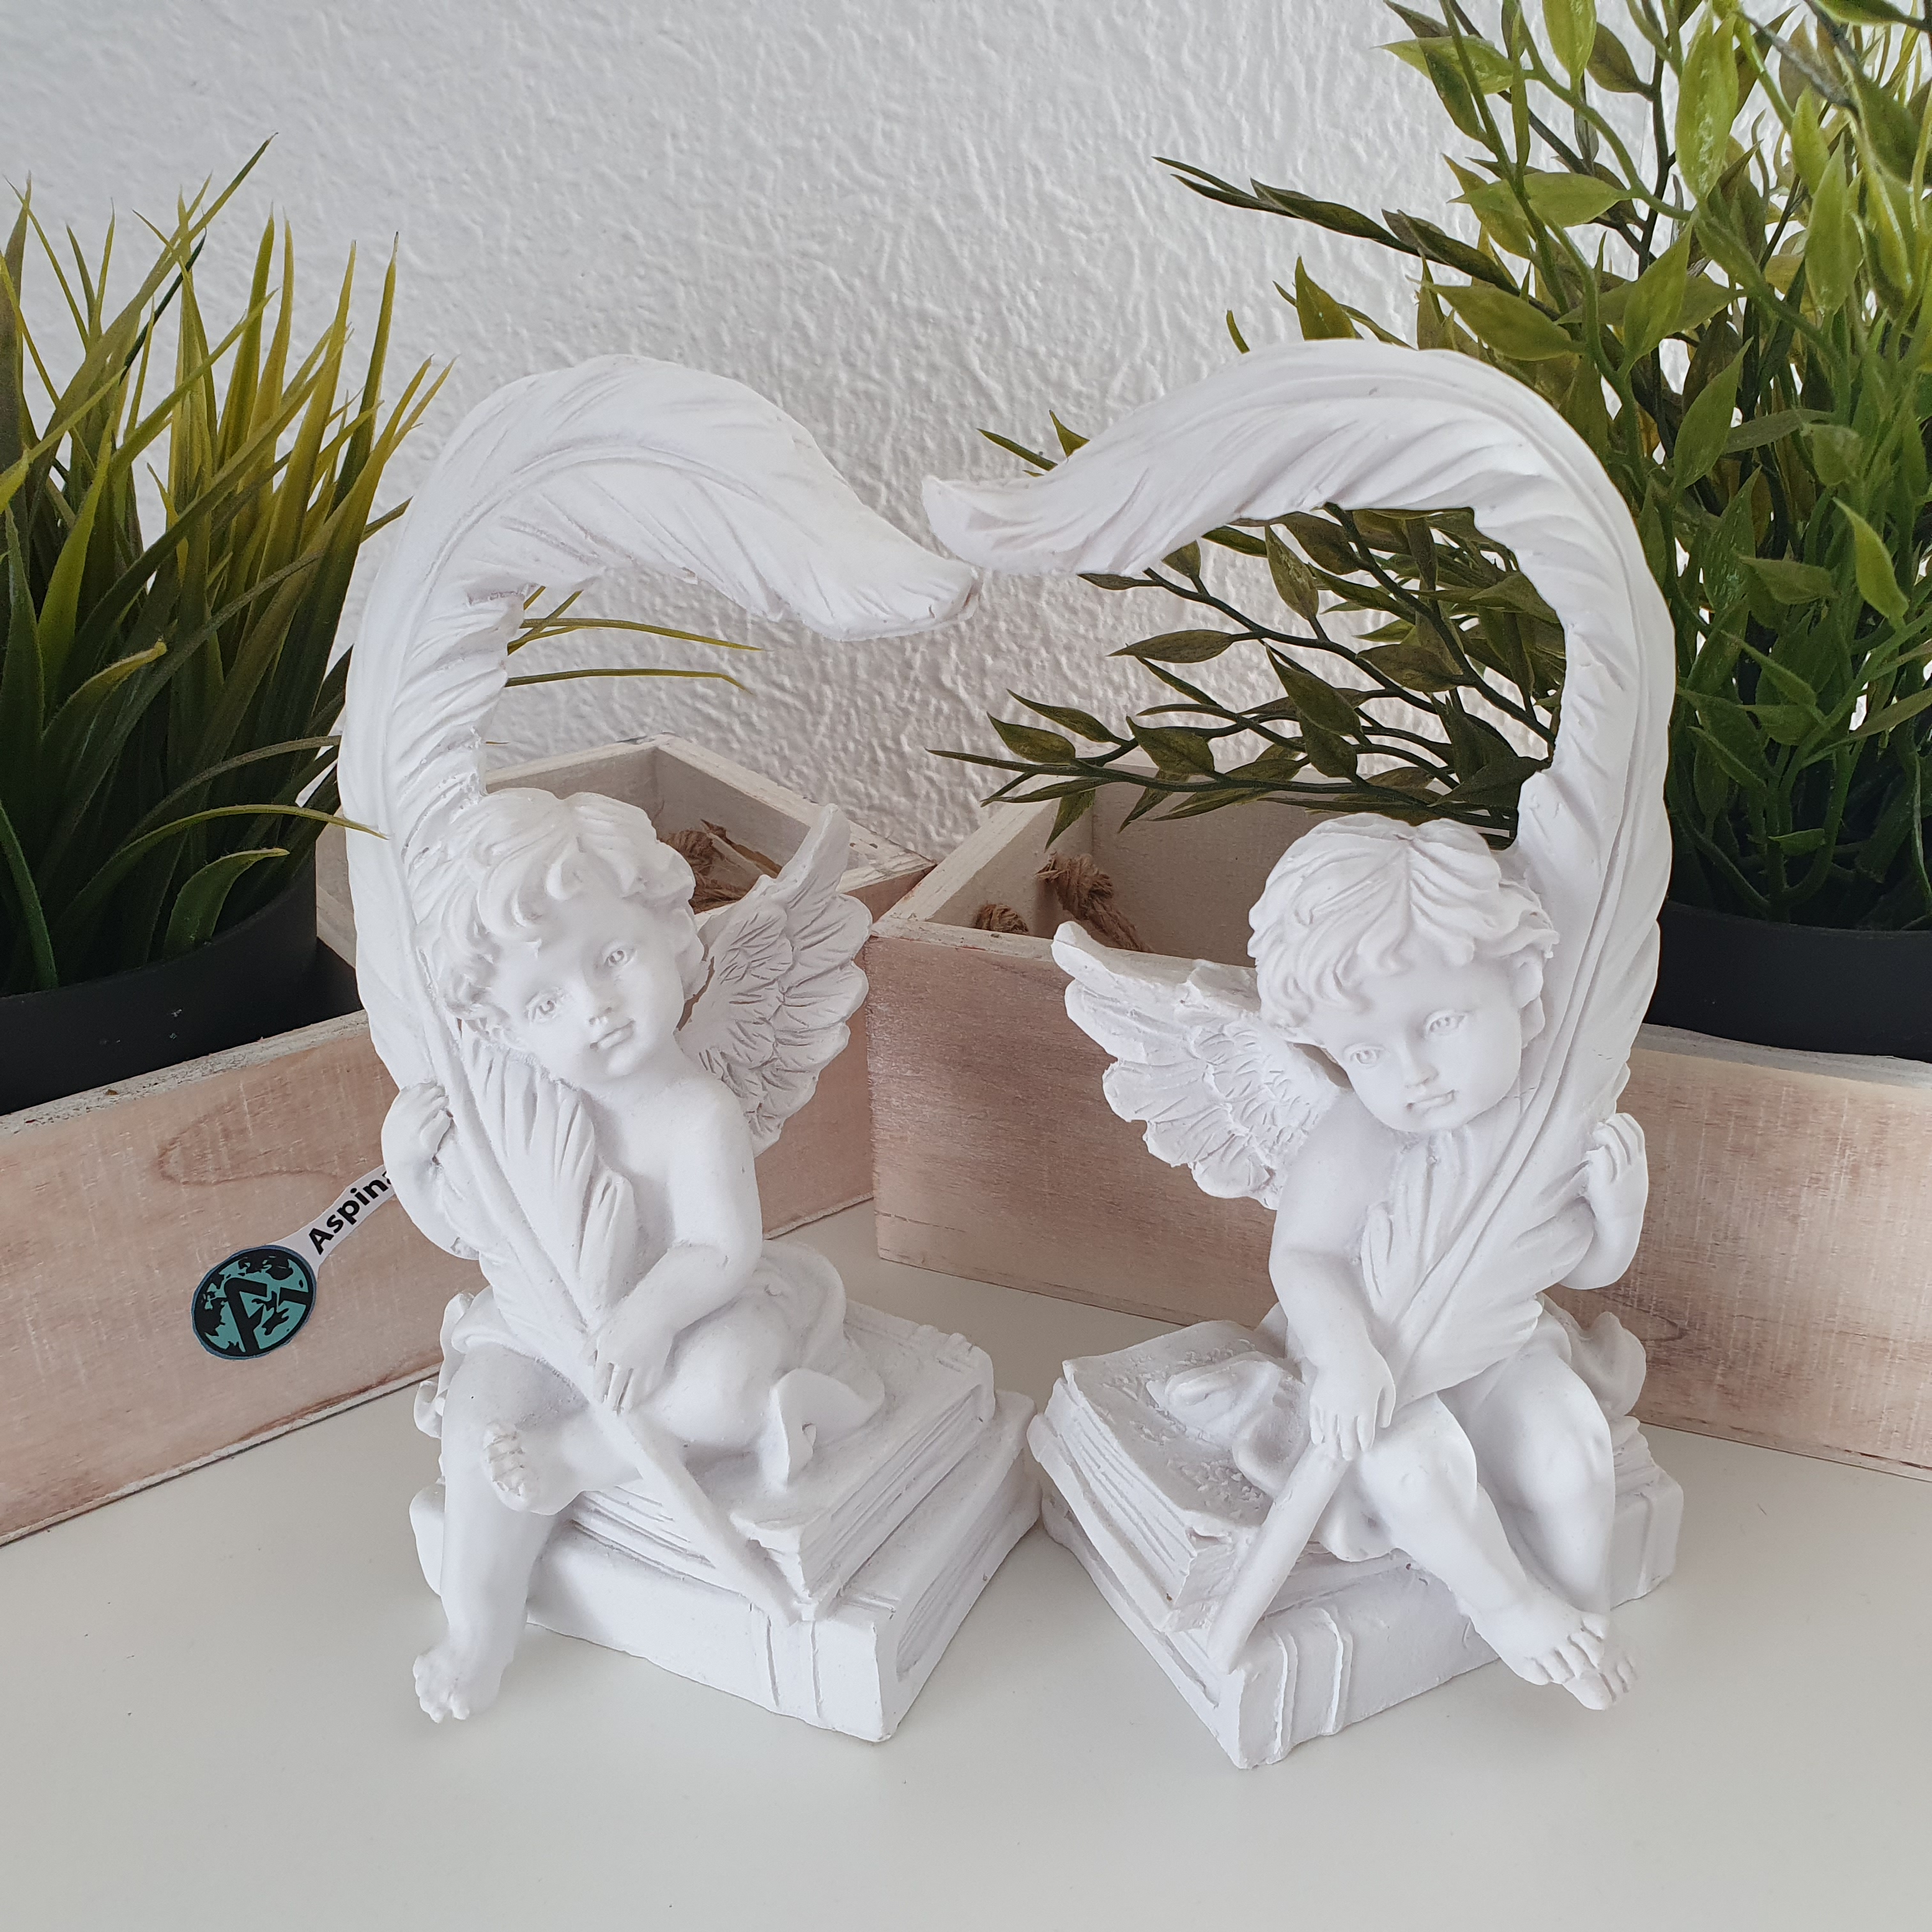 Grabengel sitzende Engel Figur mit Feder 2er Set 19 cm